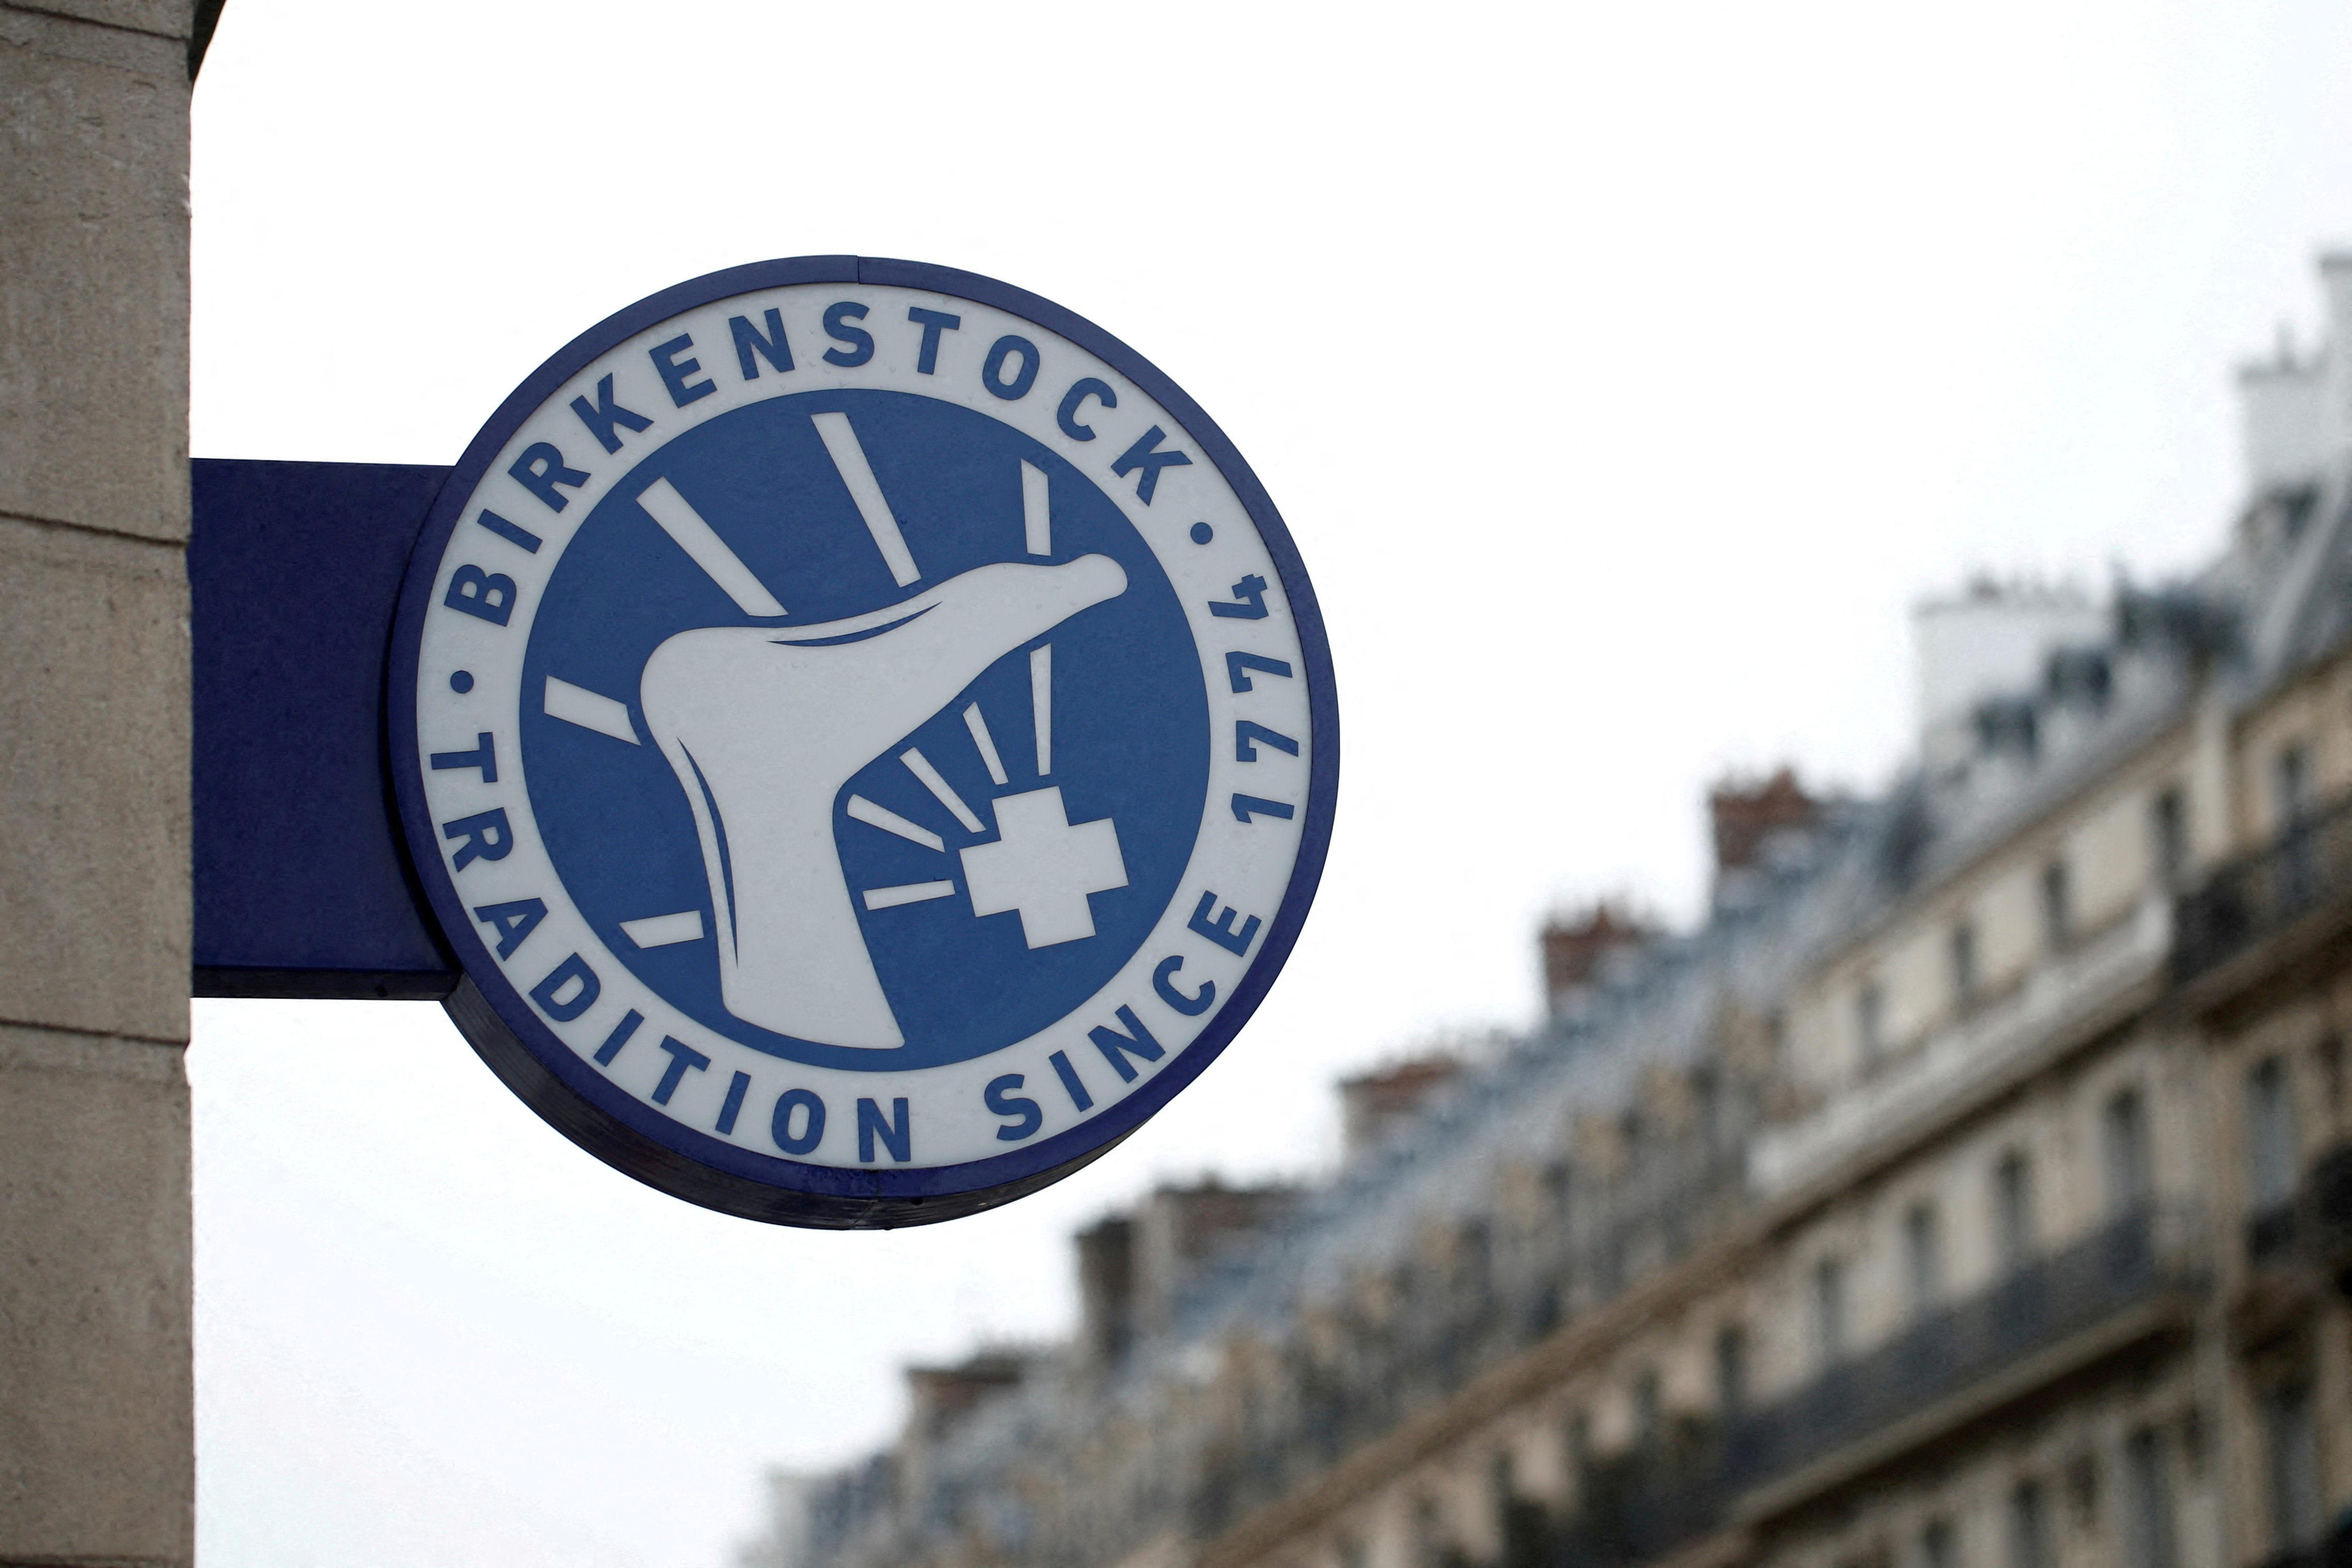 Birkenstock Looks to Price IPO at Top of Range, Reuters Reports - Bloomberg